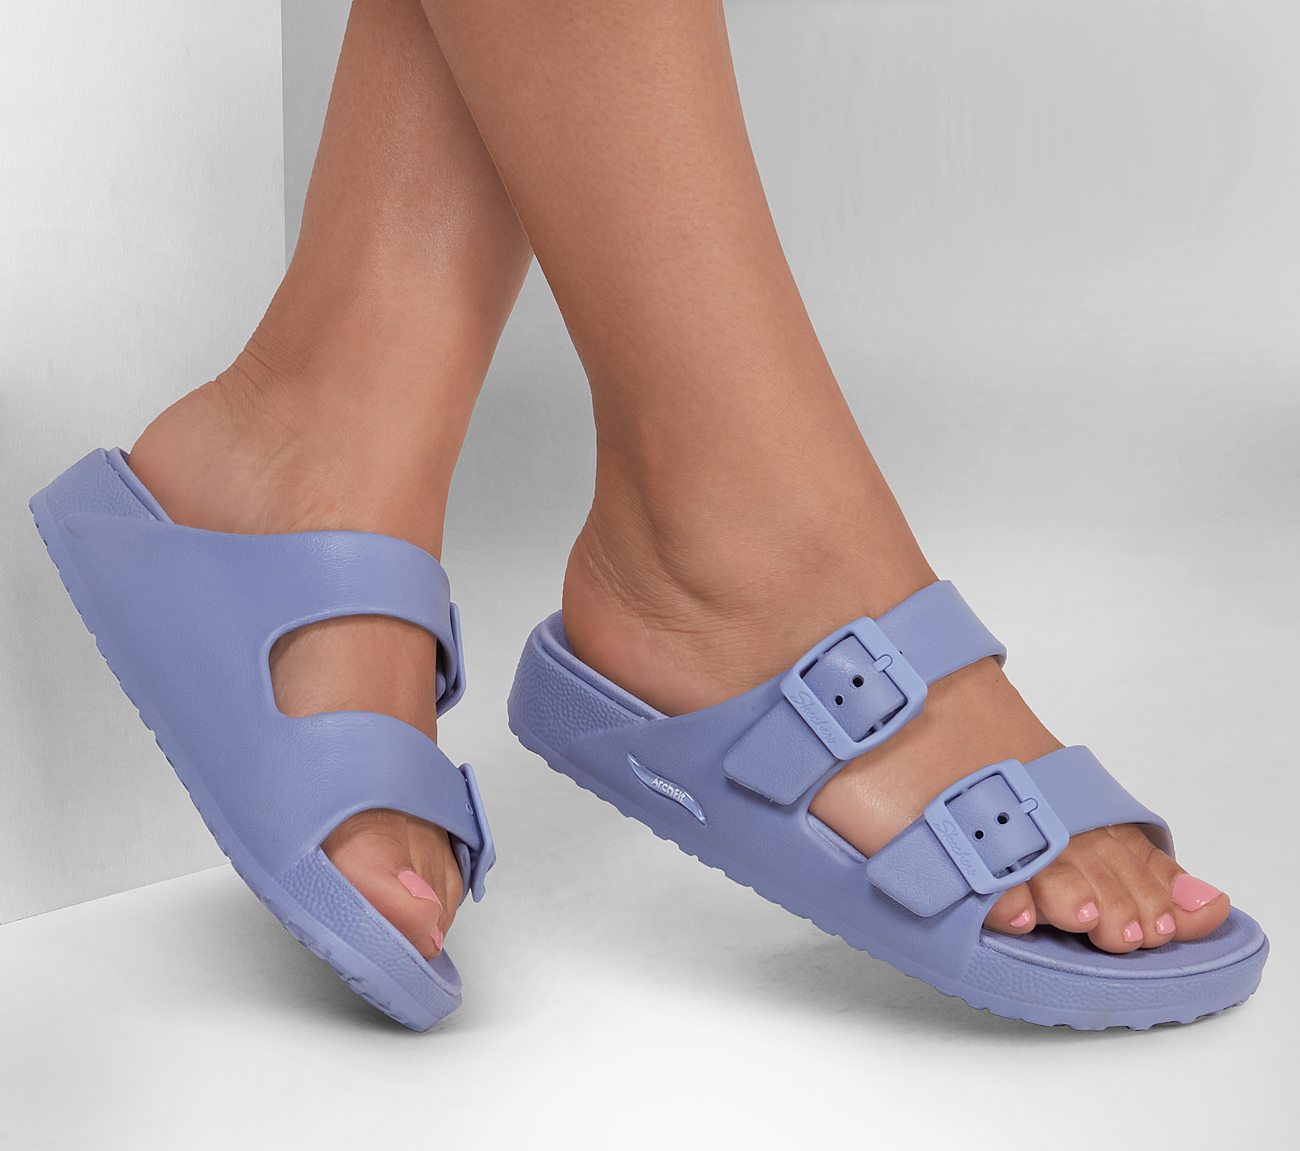 Arch Fit Cali Breeze 2.0 Sandal Skechers